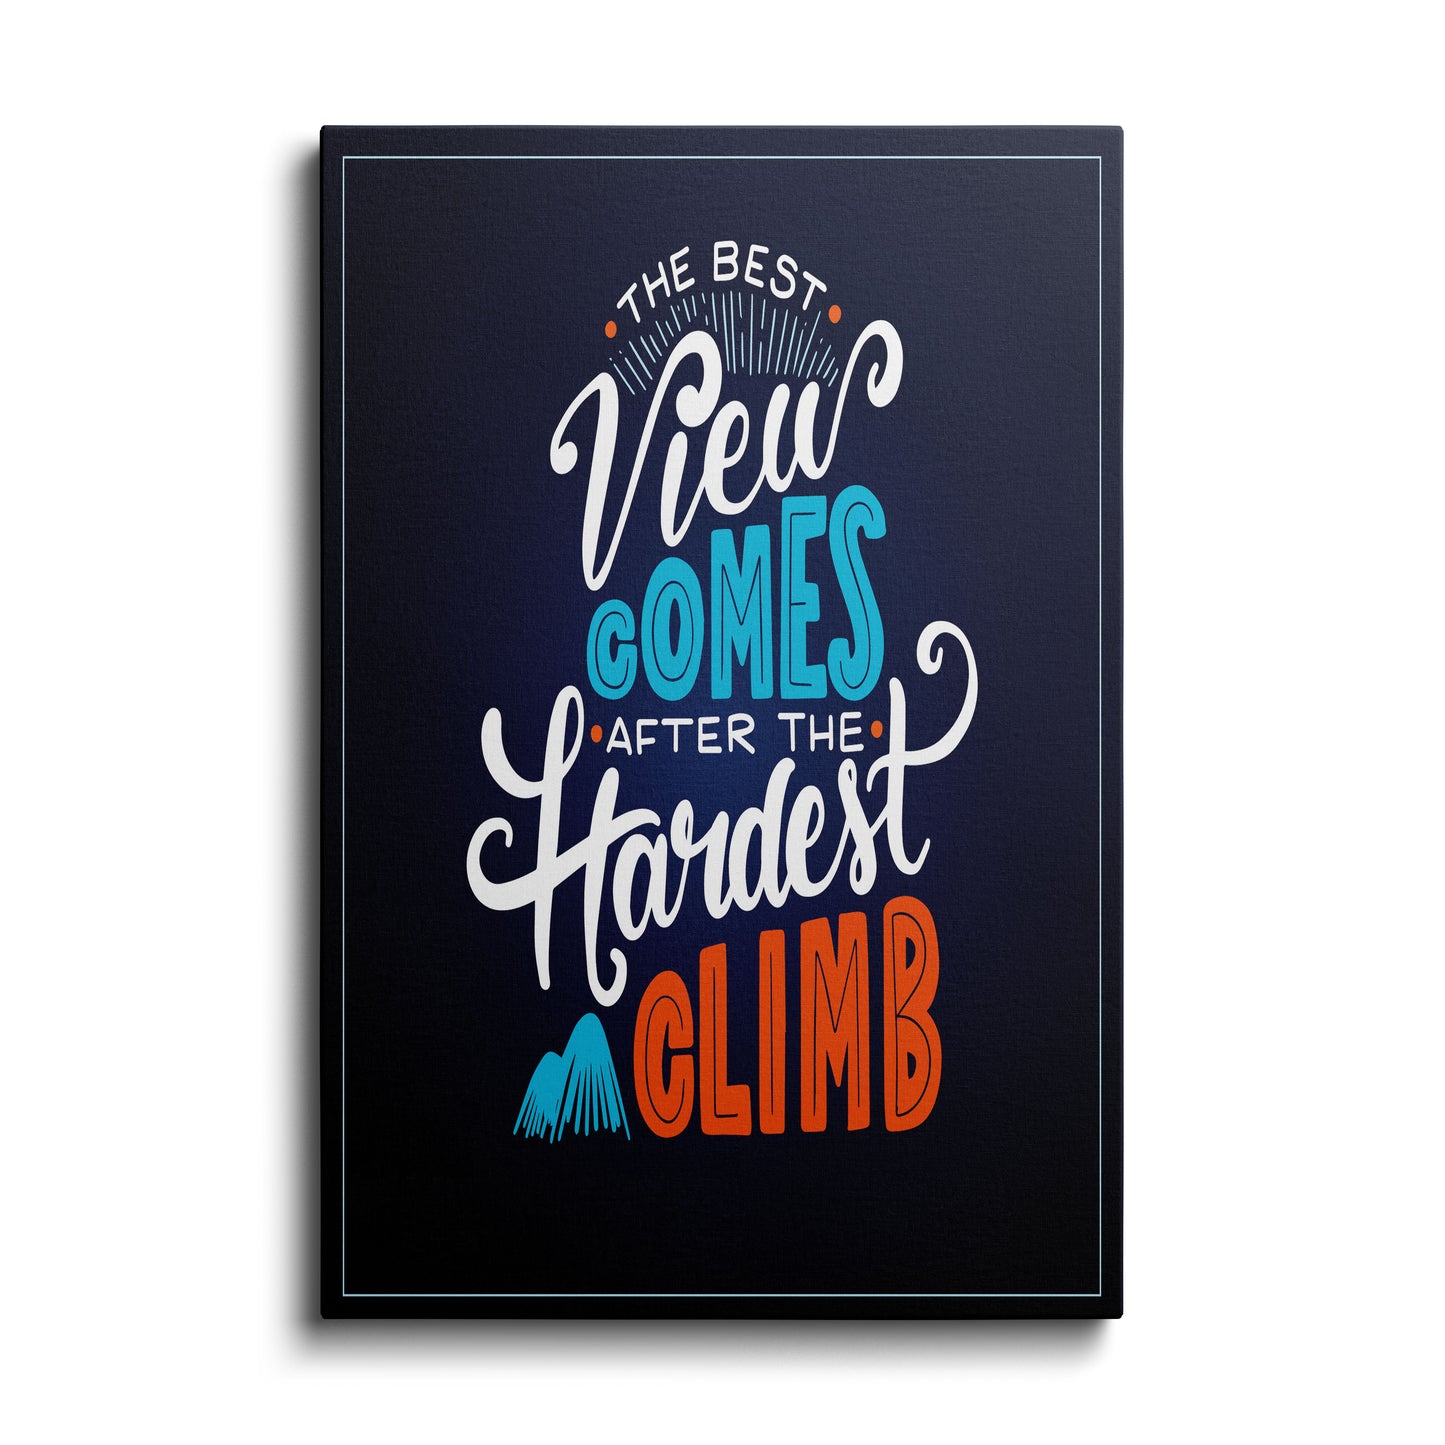 Hardest Climb---